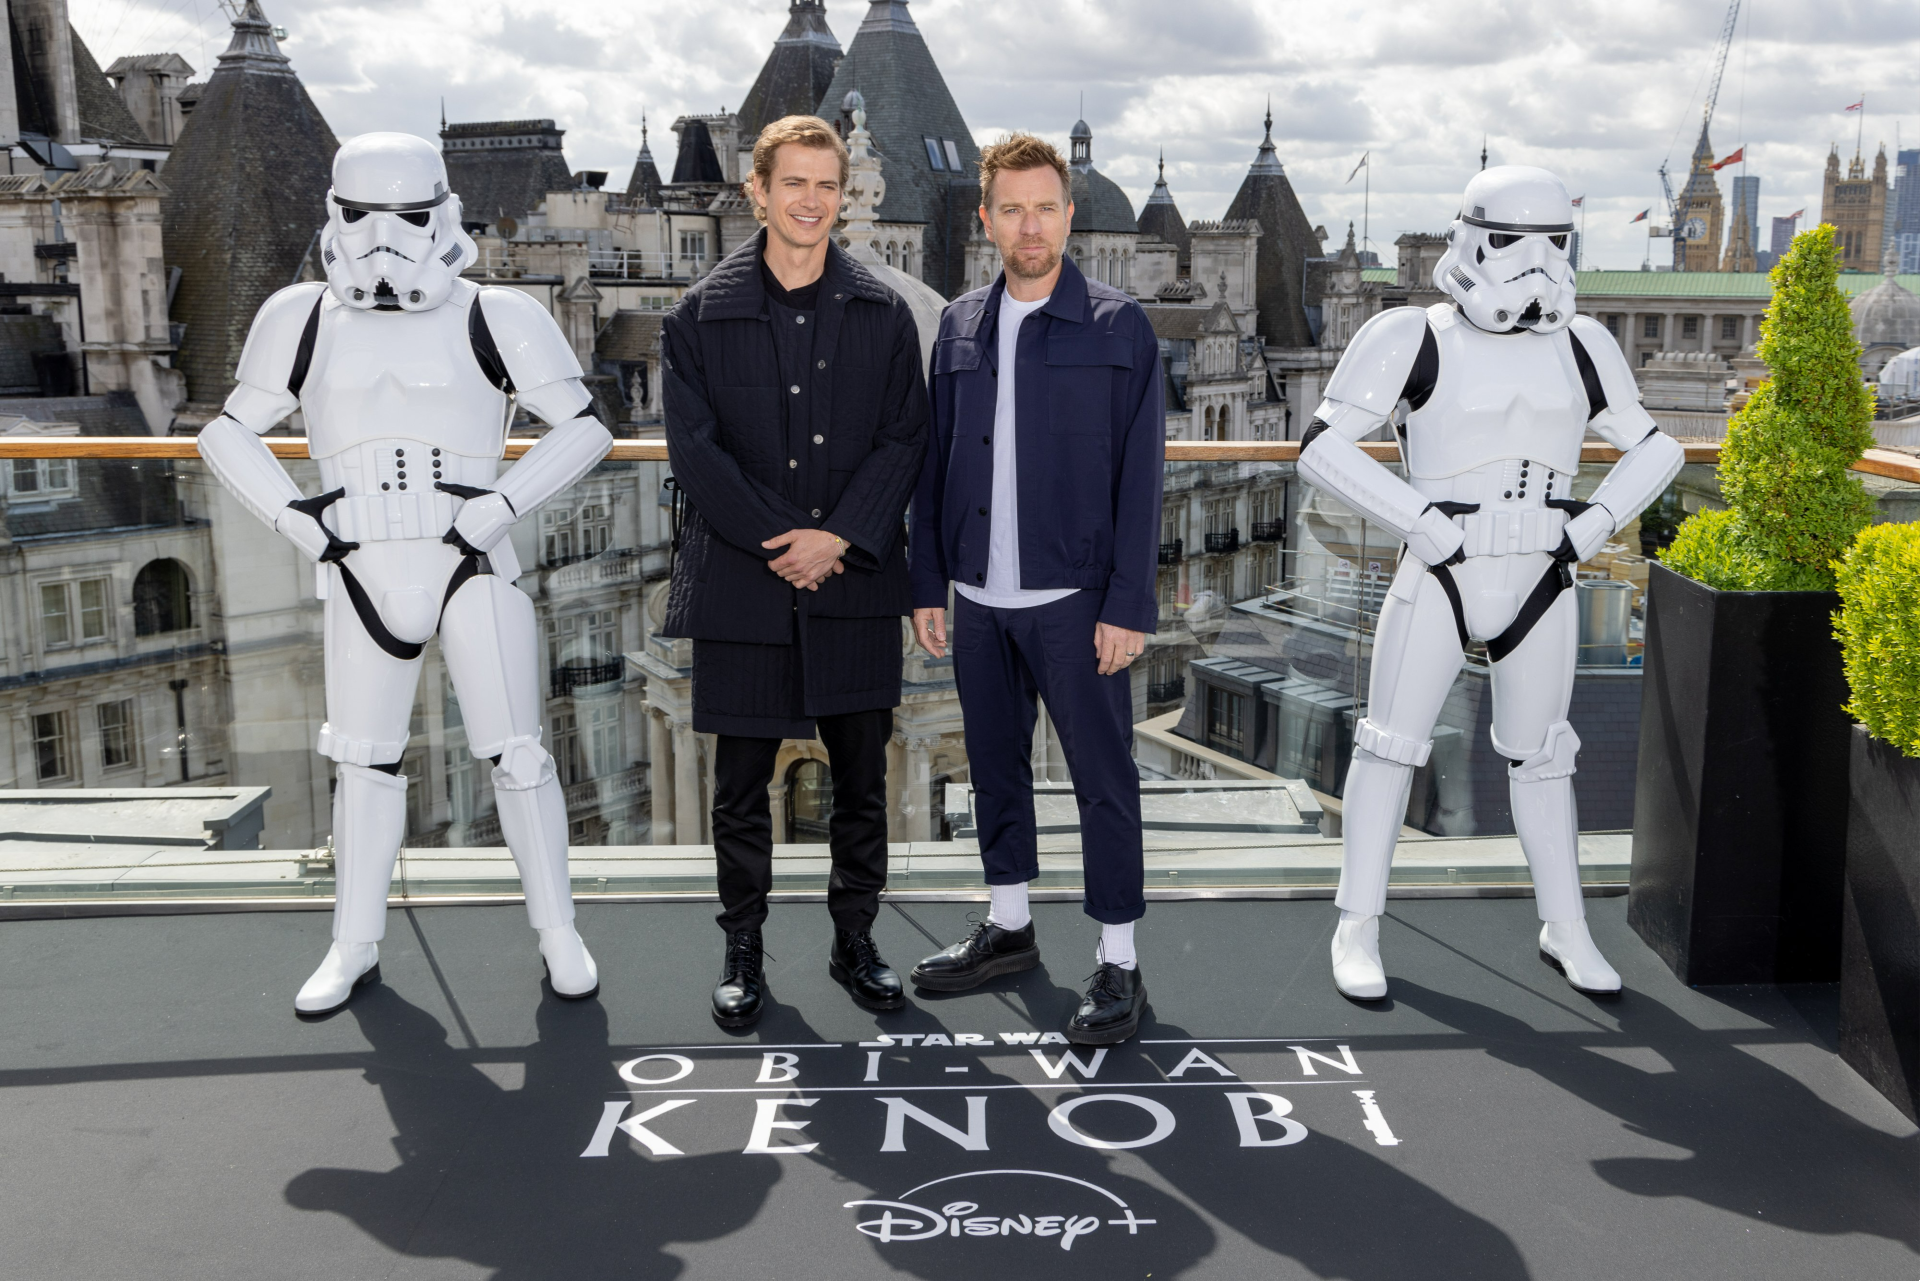  Ewan and Hayden of Obi-Wan Kenobi make their entrance in लंडन | May 12, 2022